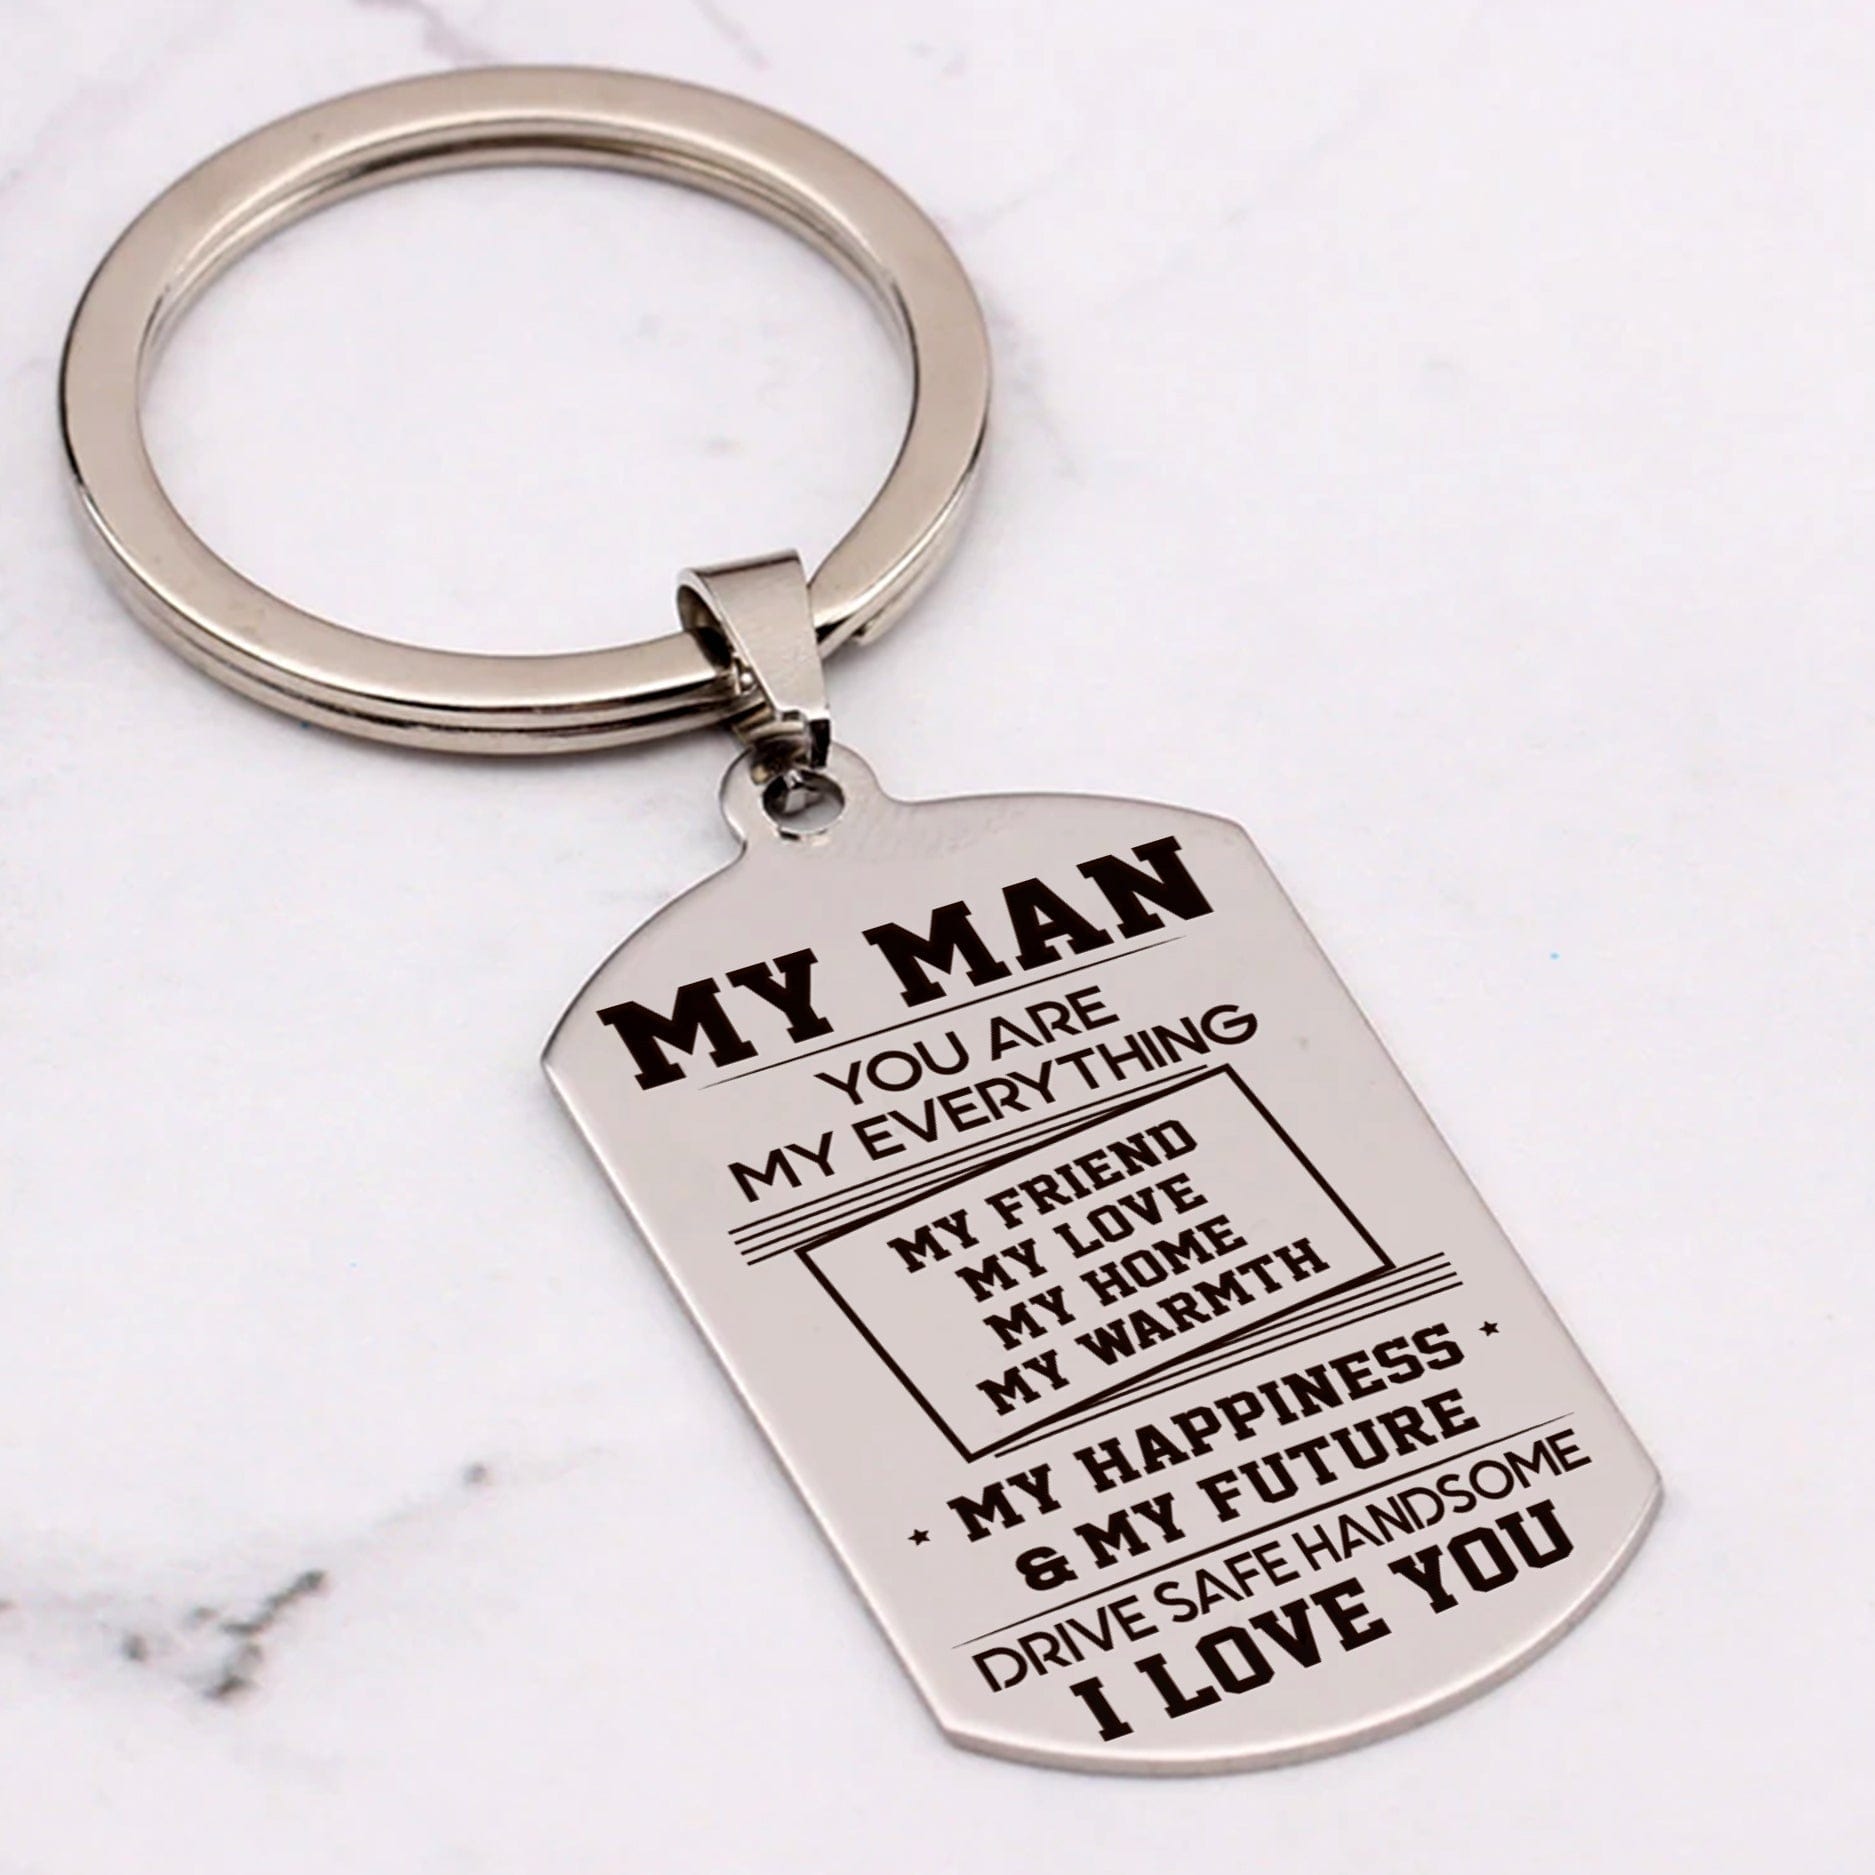 To My Man - Drive Safe Handsome - Keychain Keychain MelodyNecklace